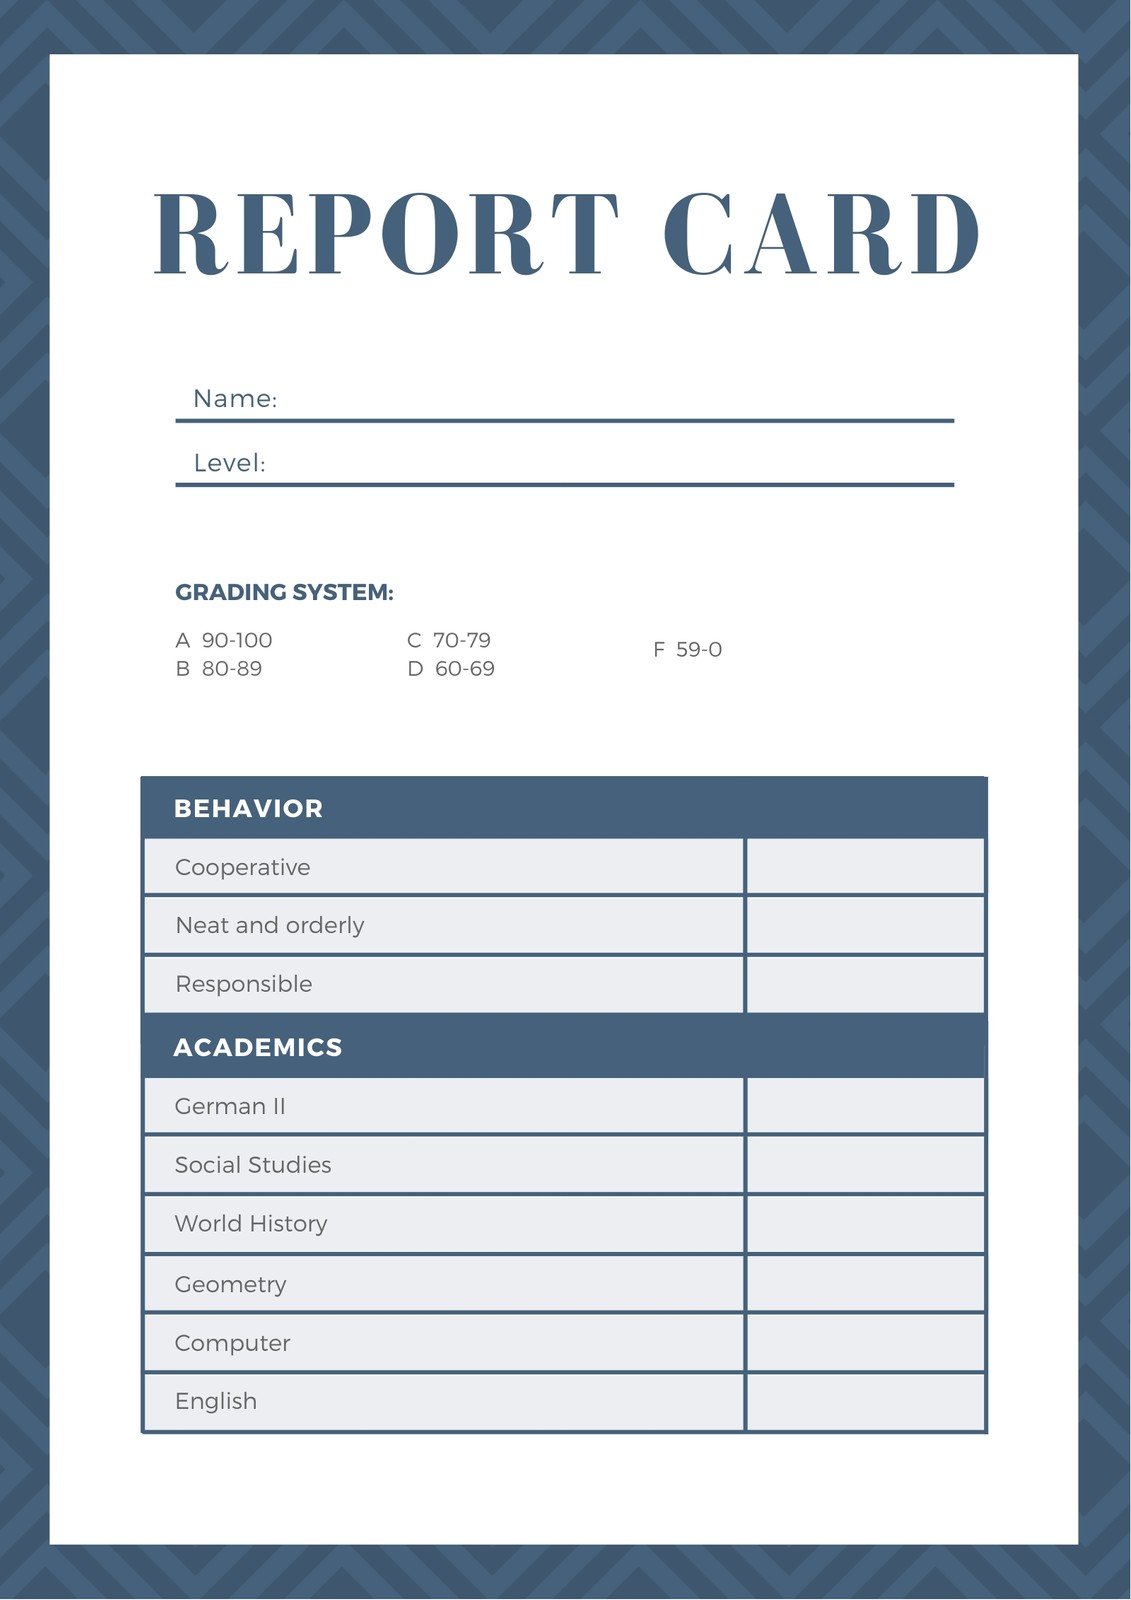 Free Printable Homeschool Report Card Template Printable Templates